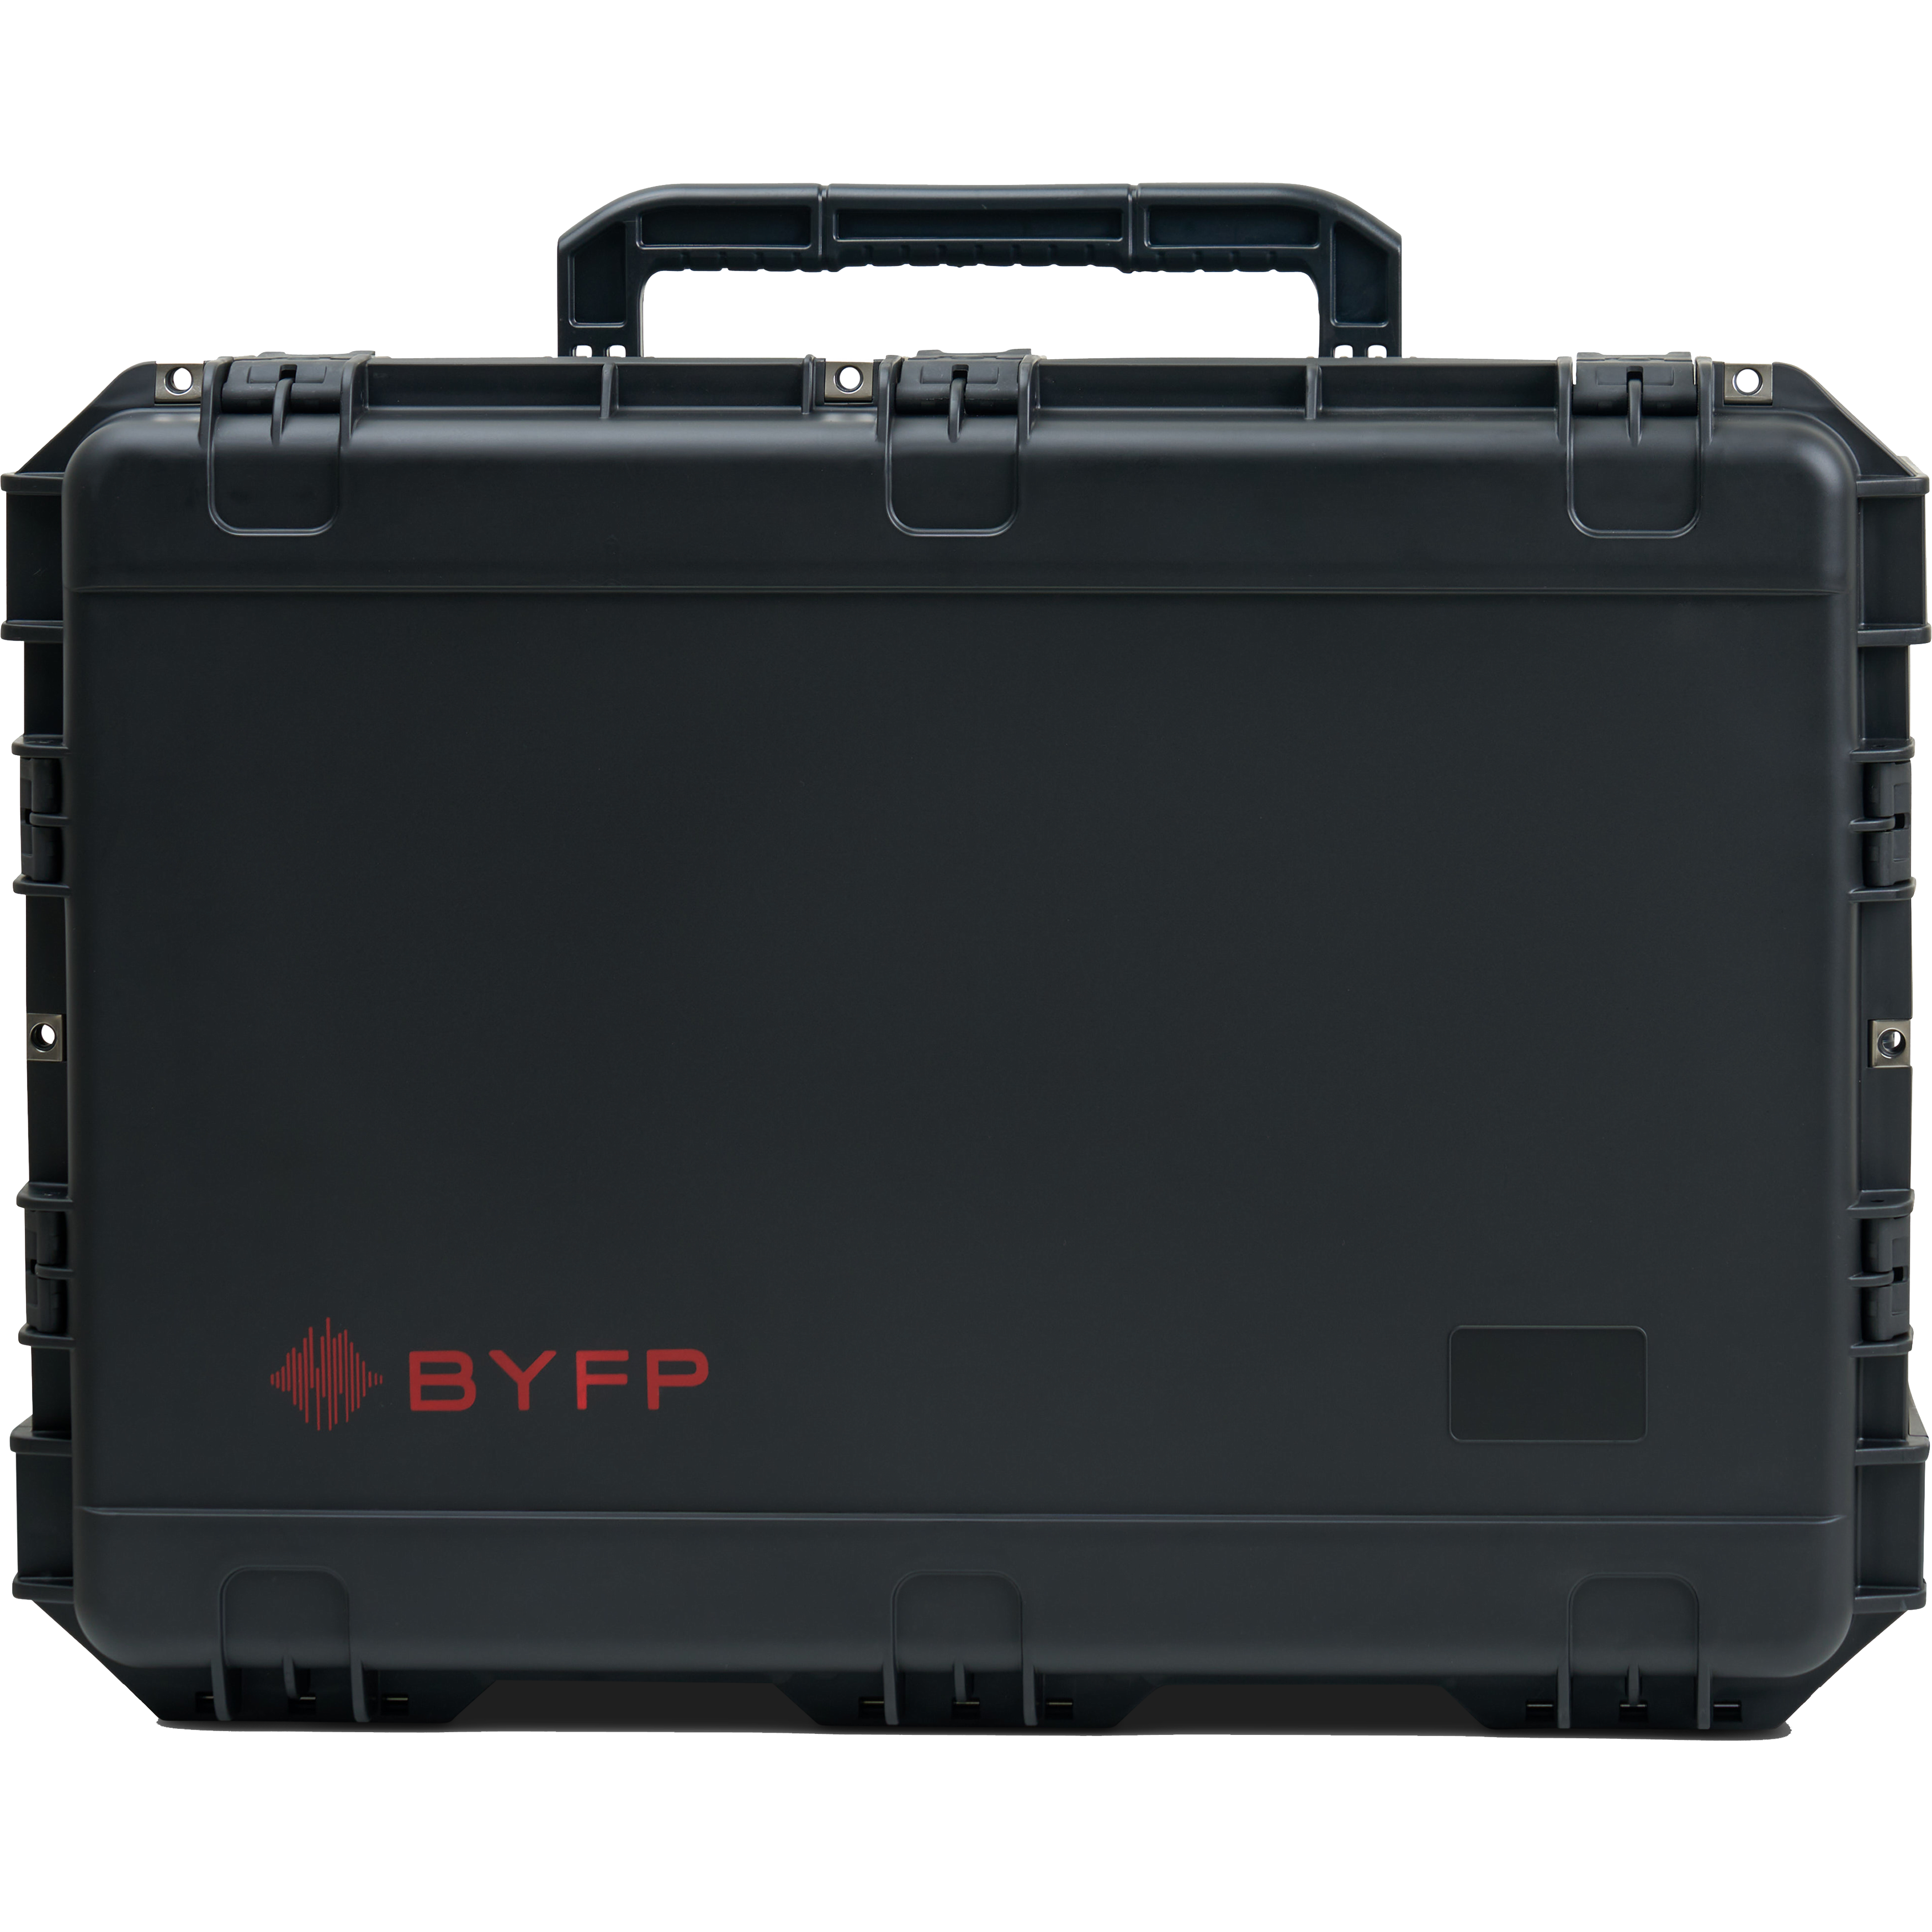 BYFP ipCase for 6x Chauvet Eve Pars